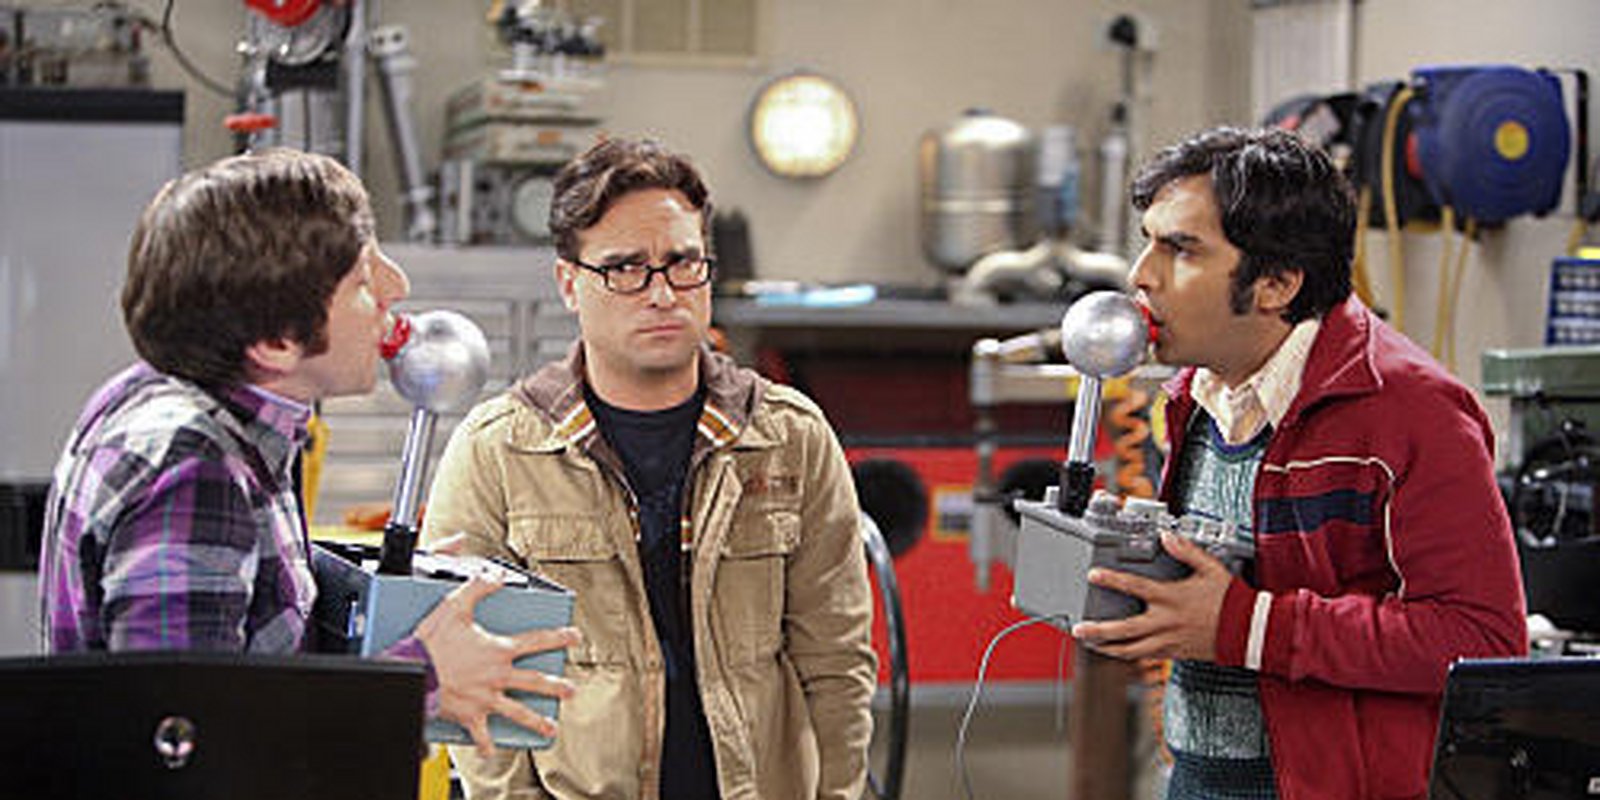 The Big Bang Theory - Staffel 5